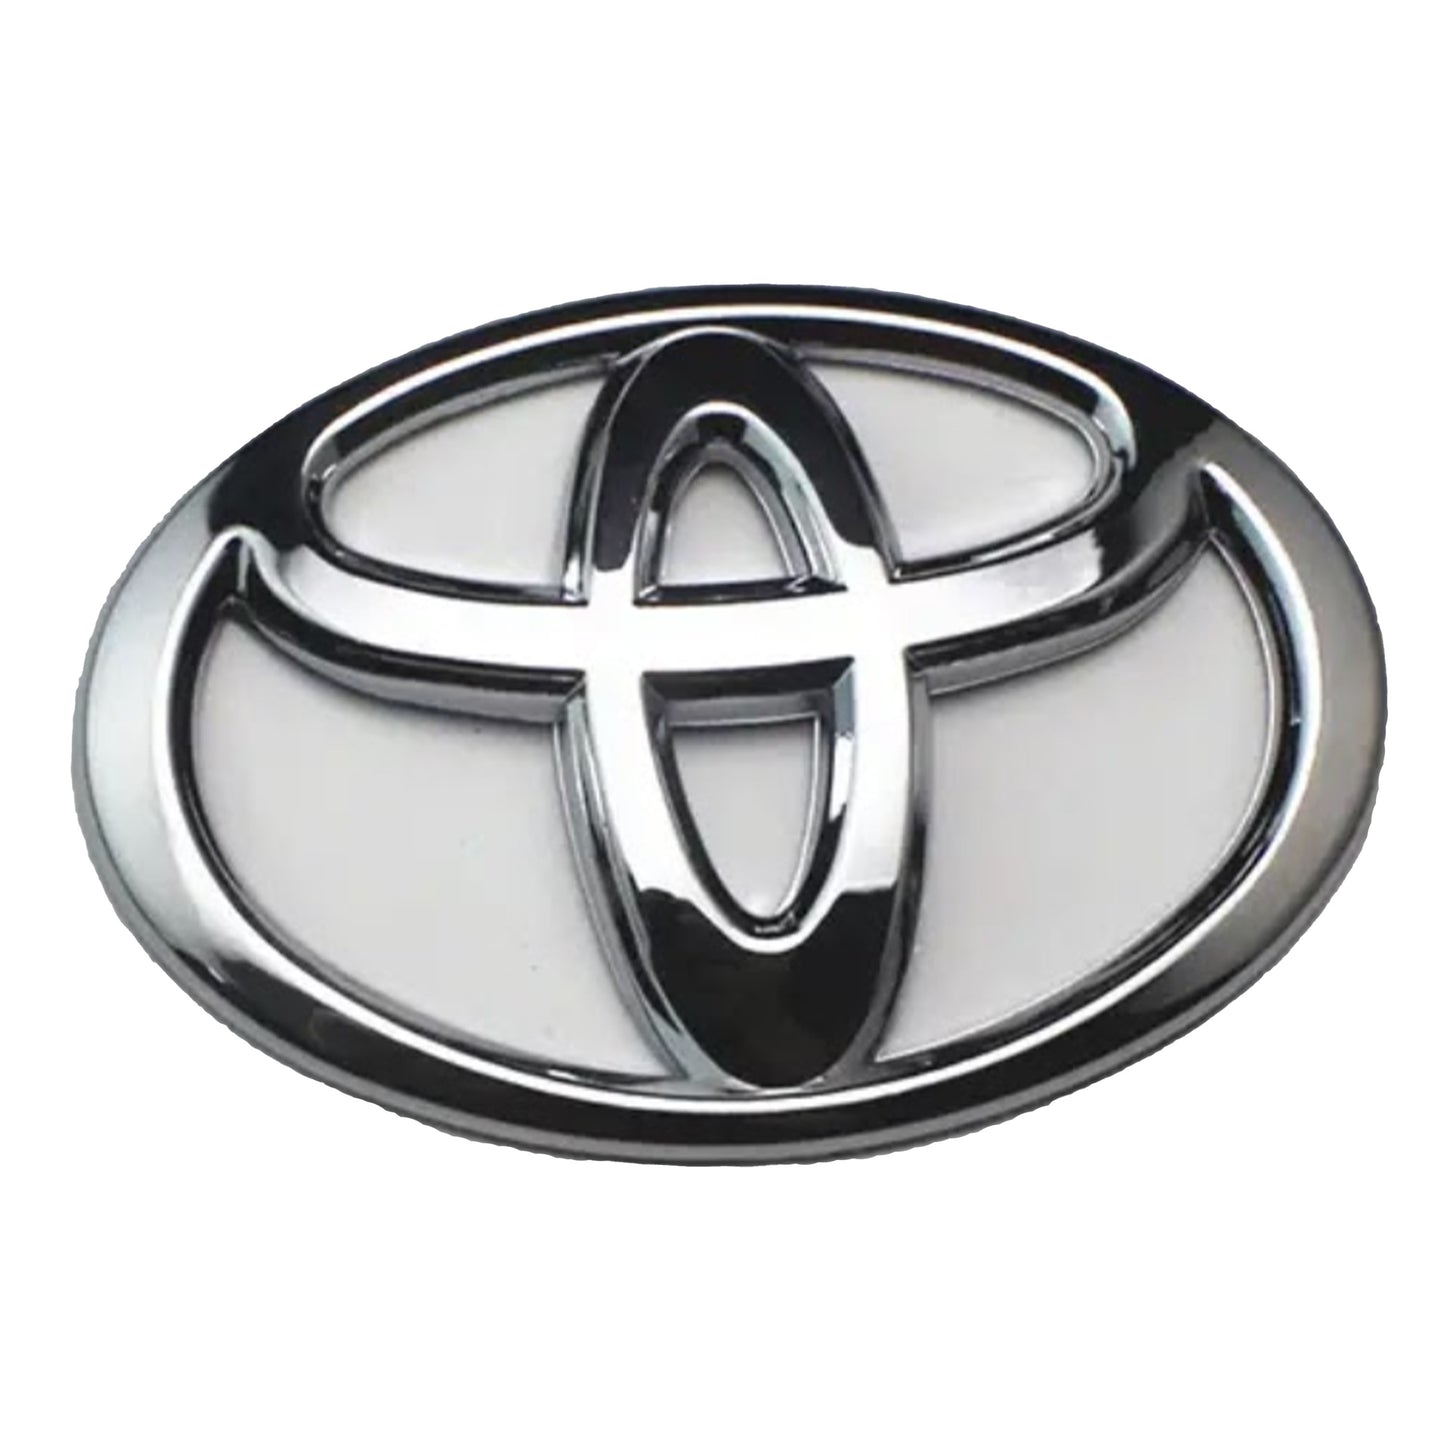 2012-2015 Toyota Tacoma Front Grille Emblem Chrome - Oem New! 17.5*12cm